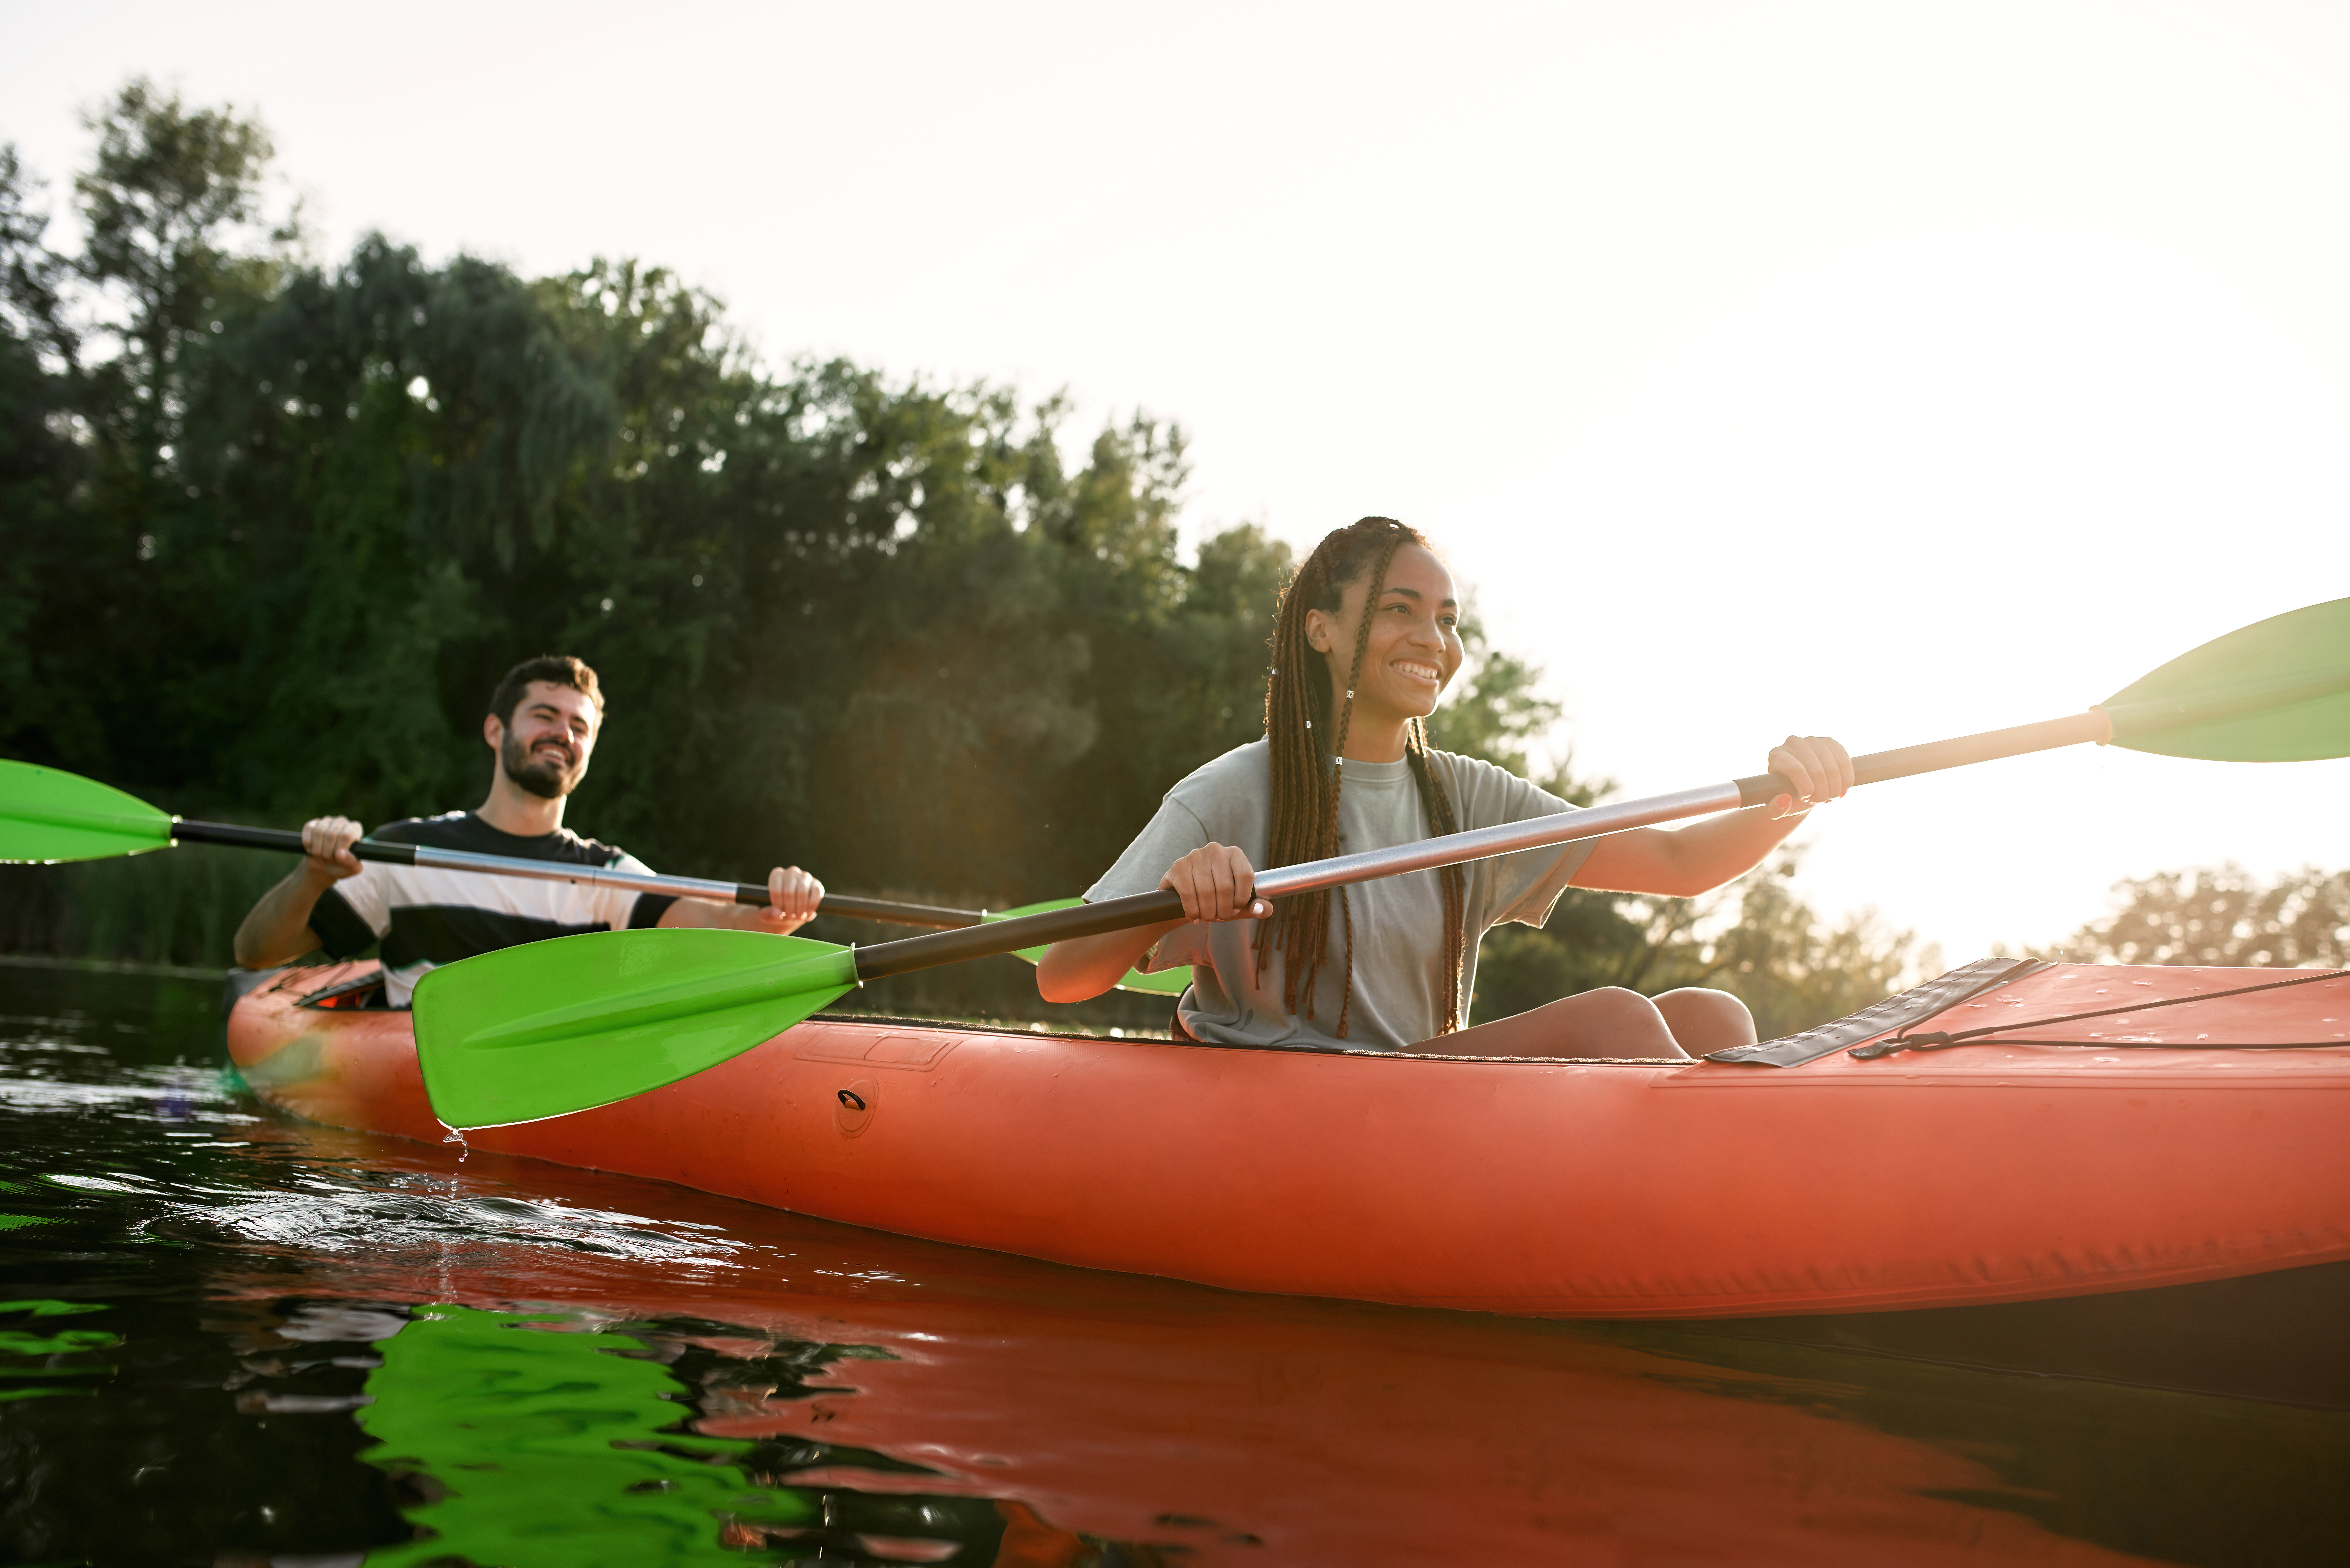 Two people kayak together on a lake.